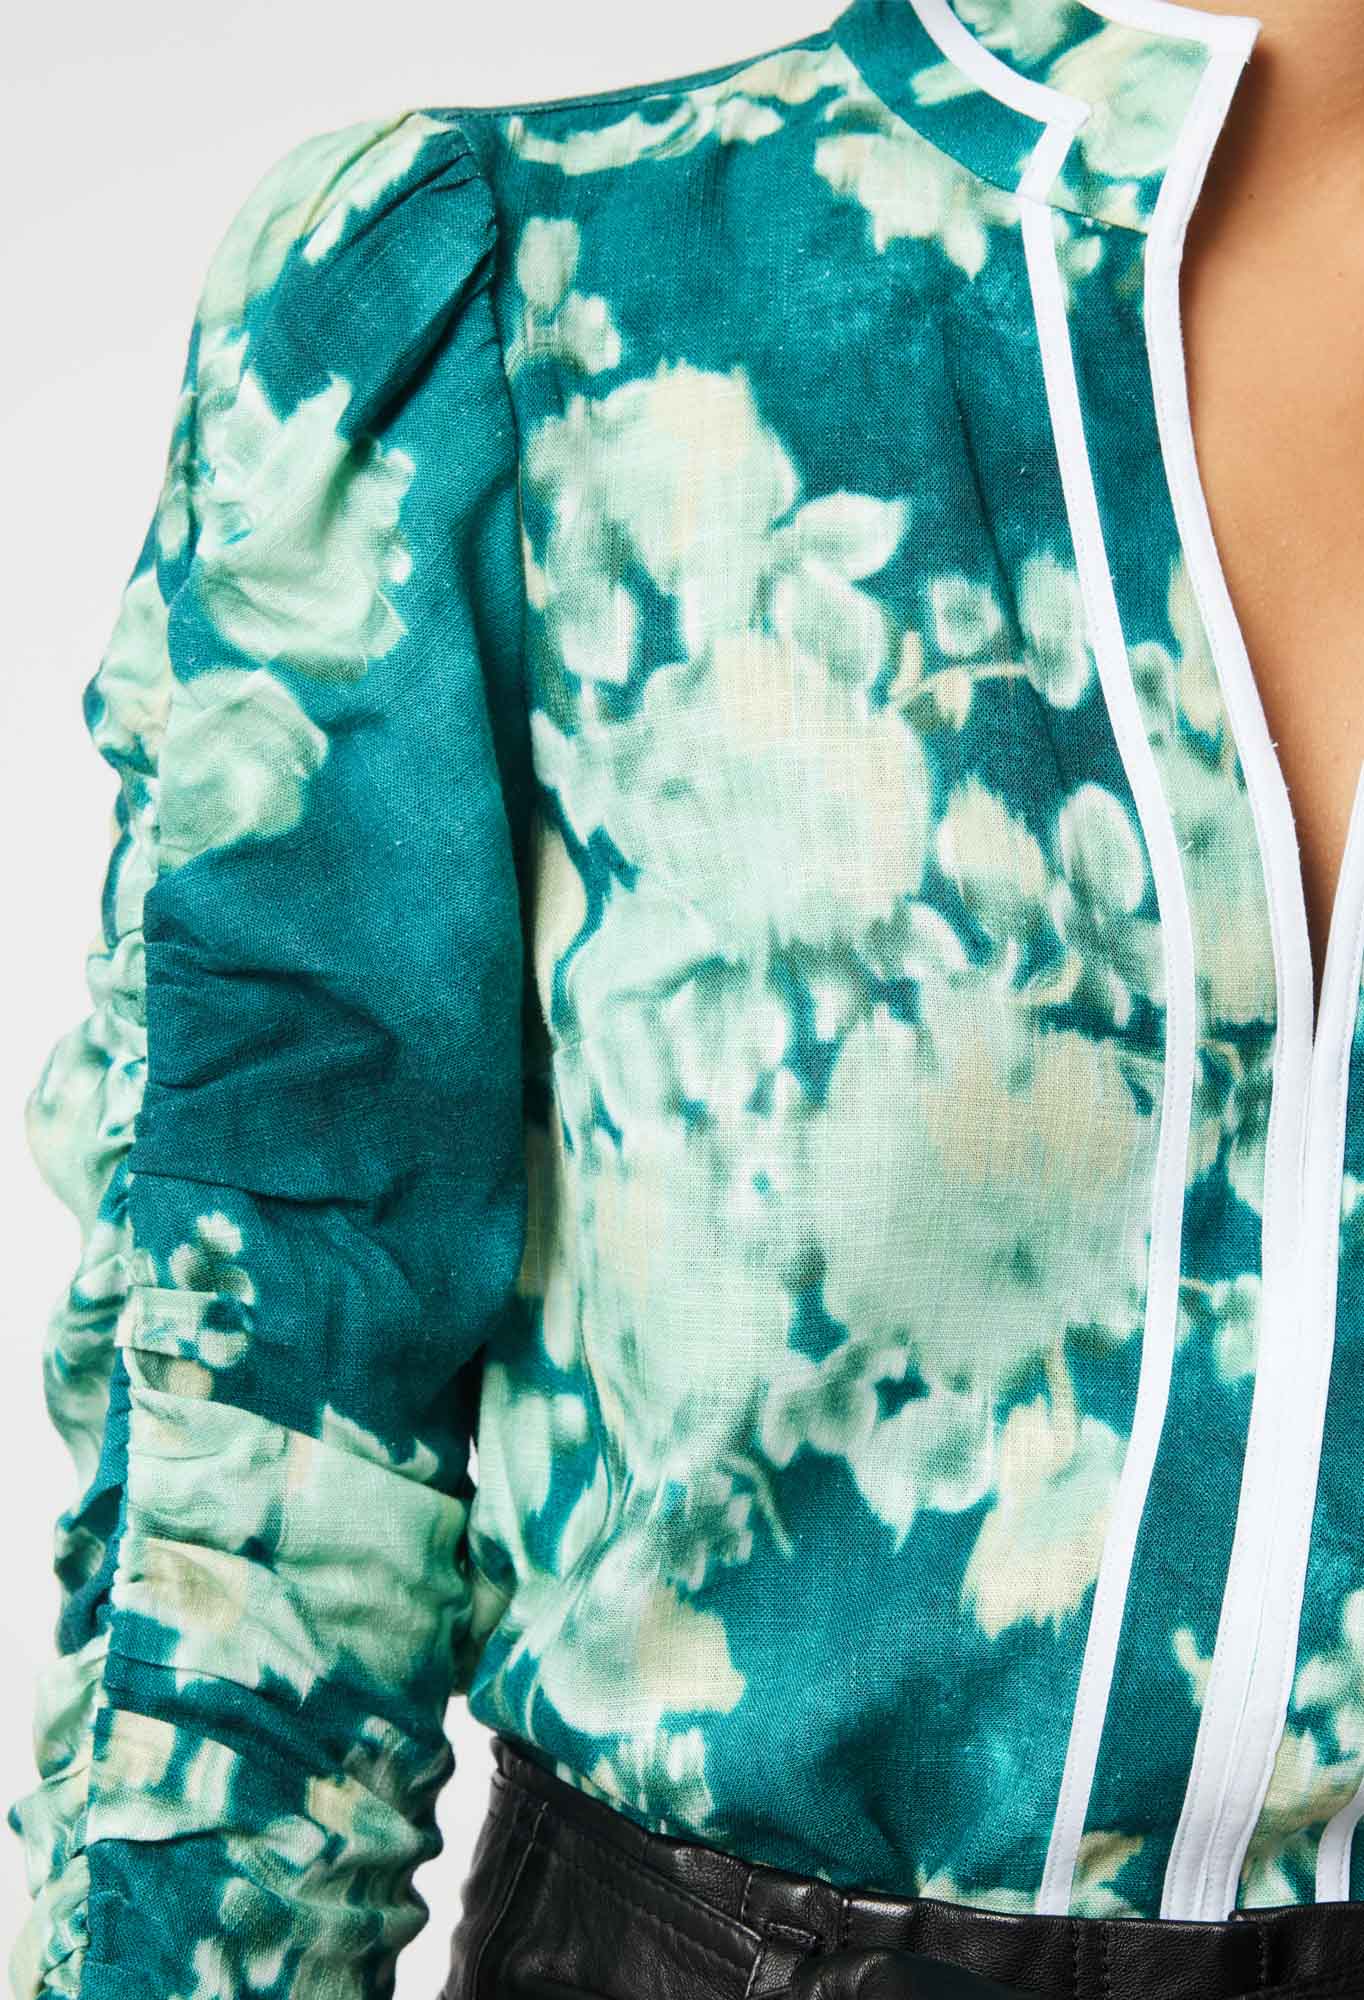 OnceWas Pavillion Linen Viscose Shirt in Jade Floral